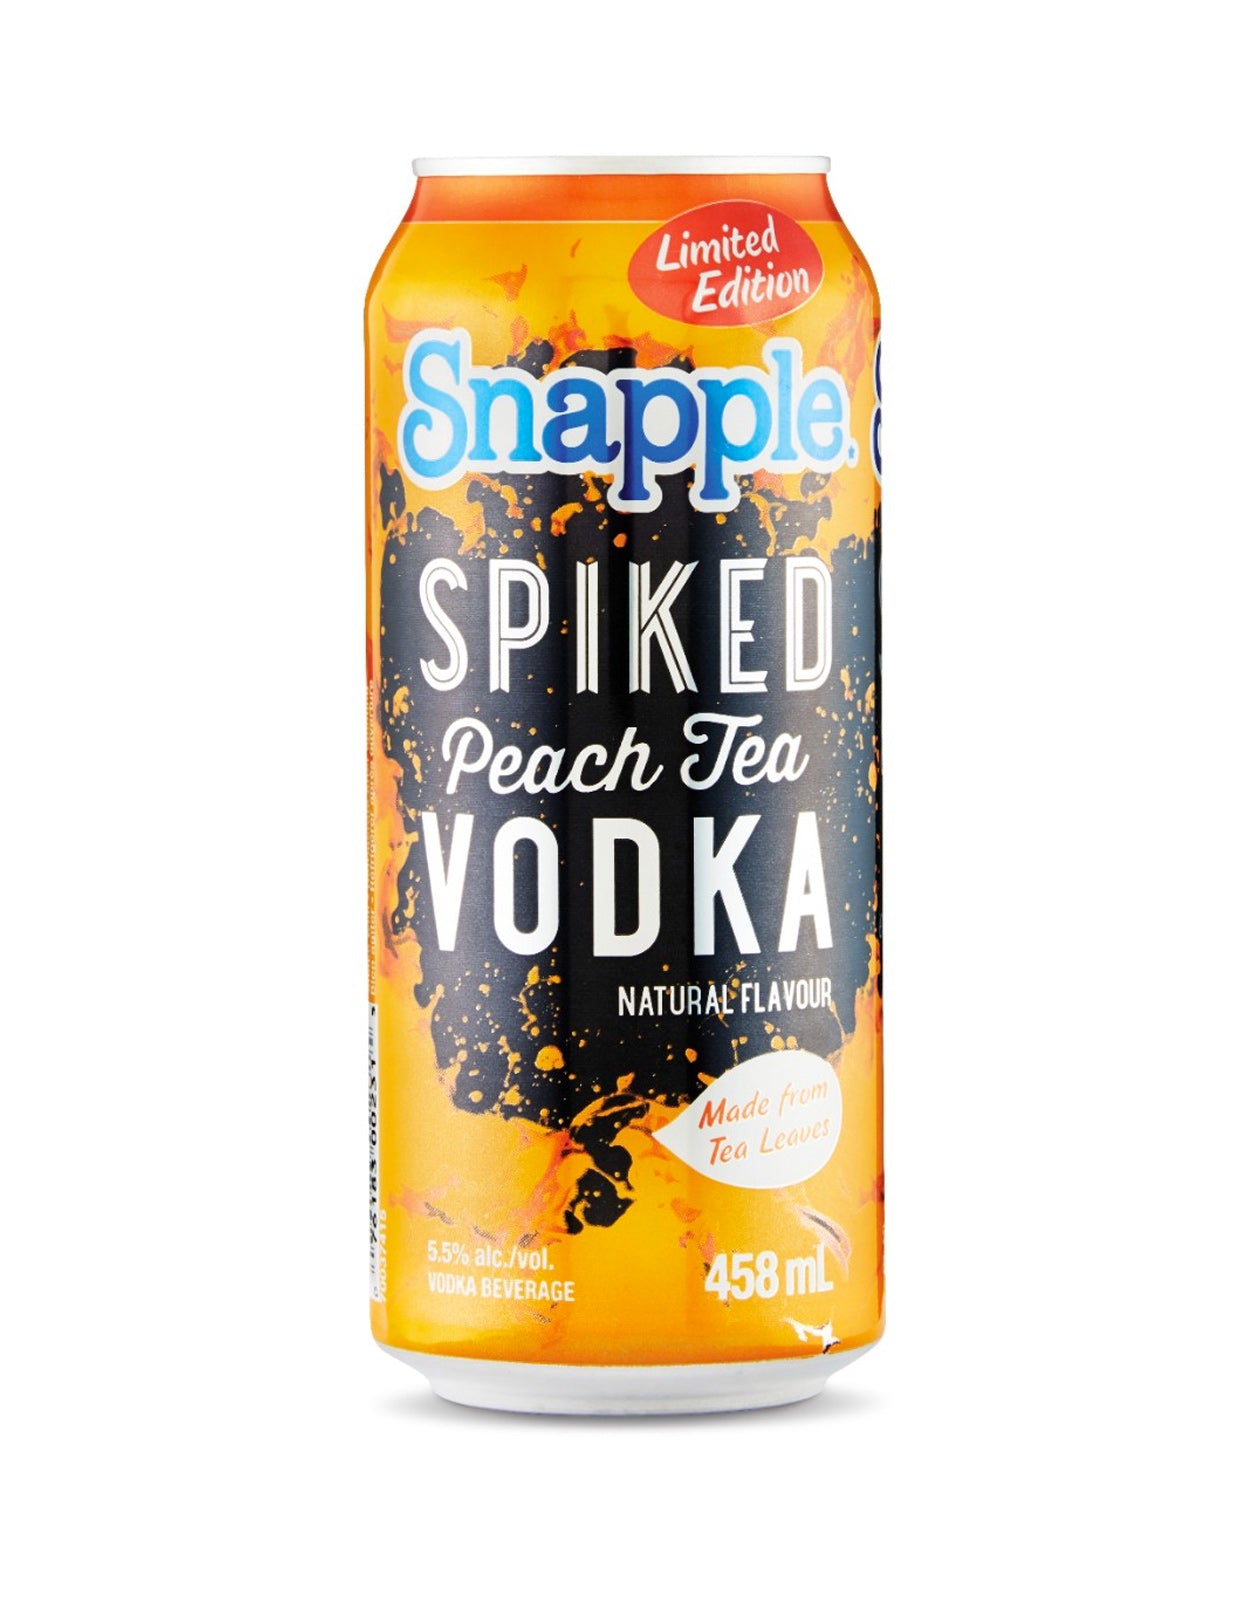 Snapple Spiked Peach Tea Vodka 458 ml - 24 Cans